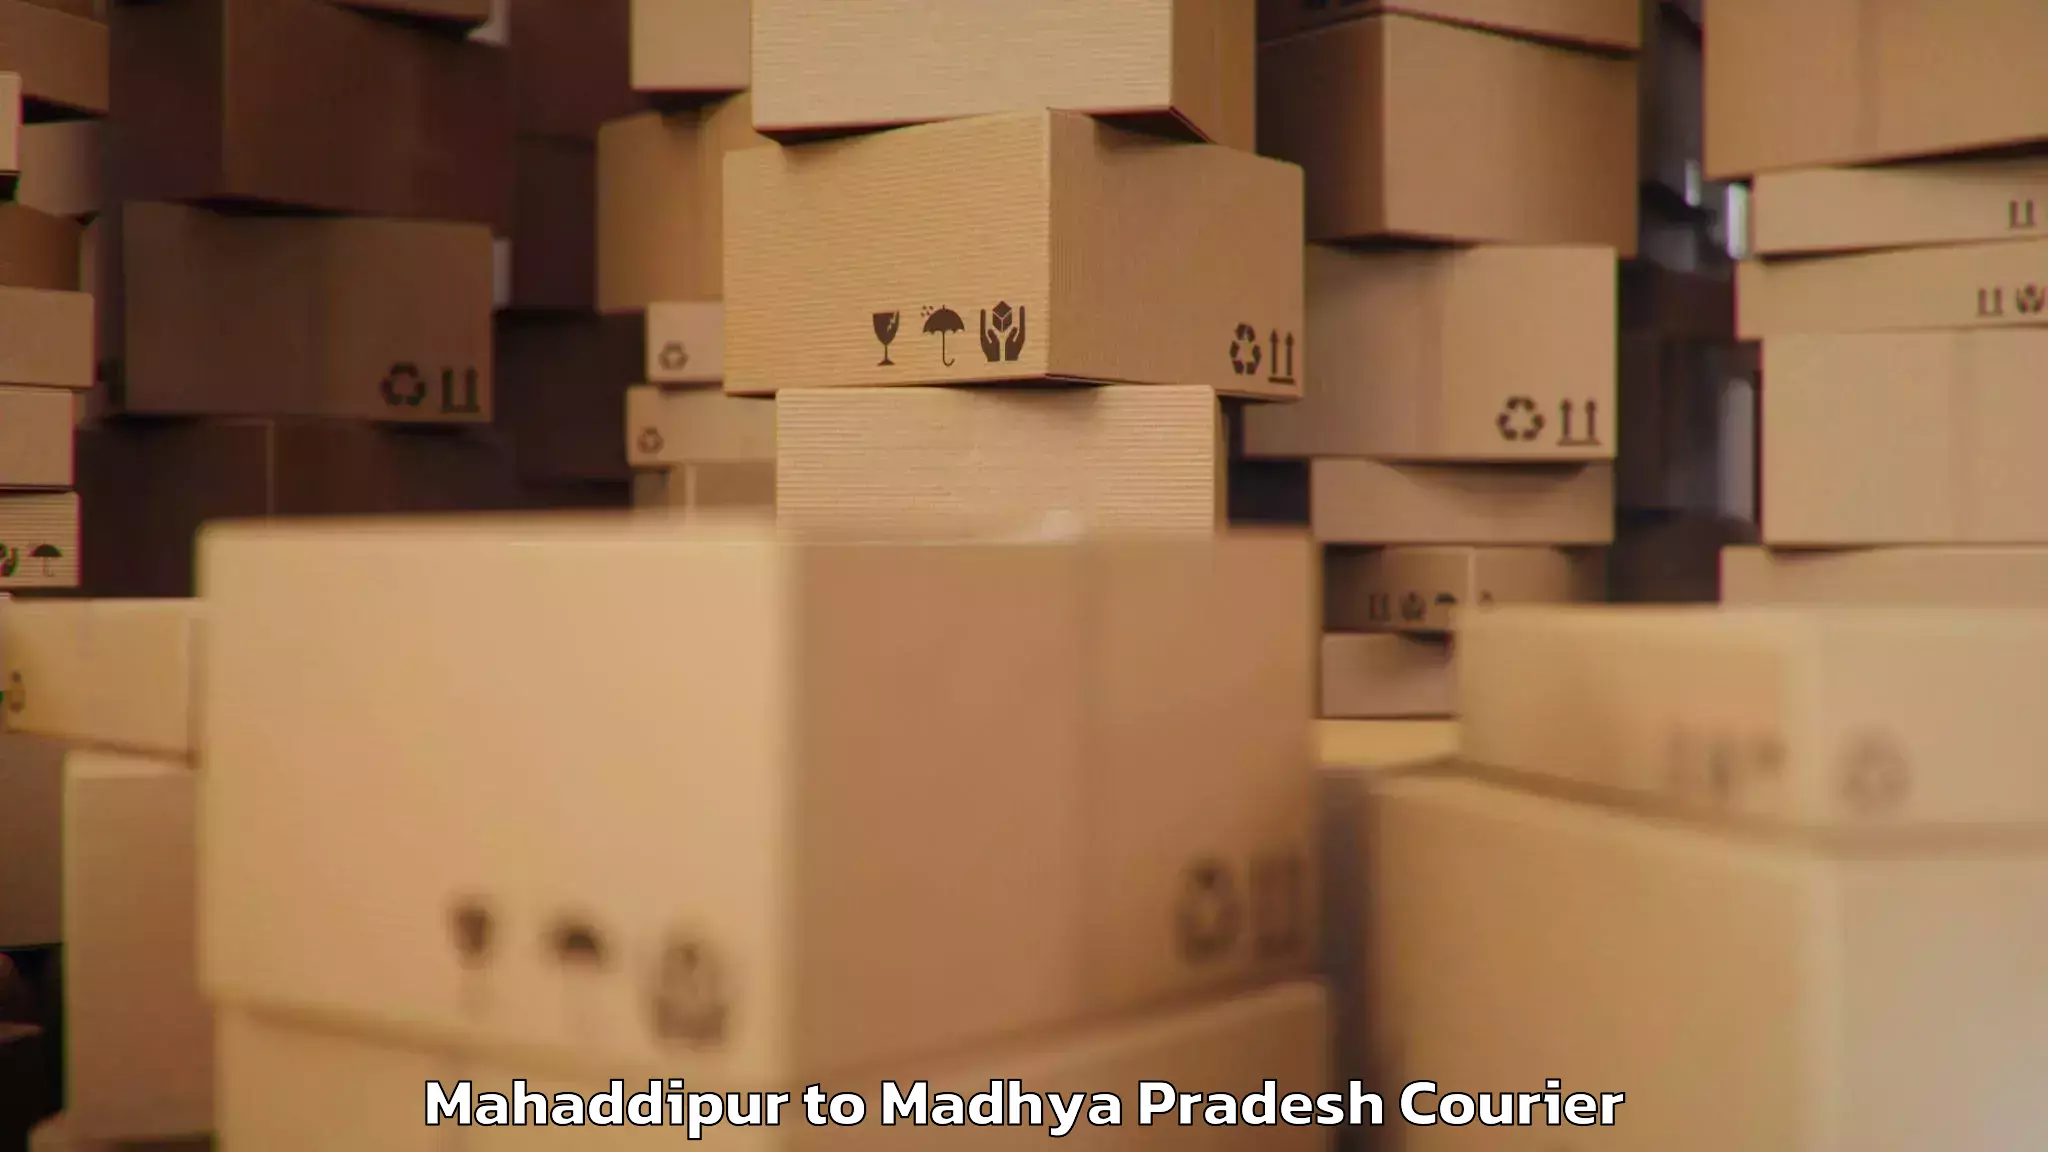 Luggage transit service Mahaddipur to Indore